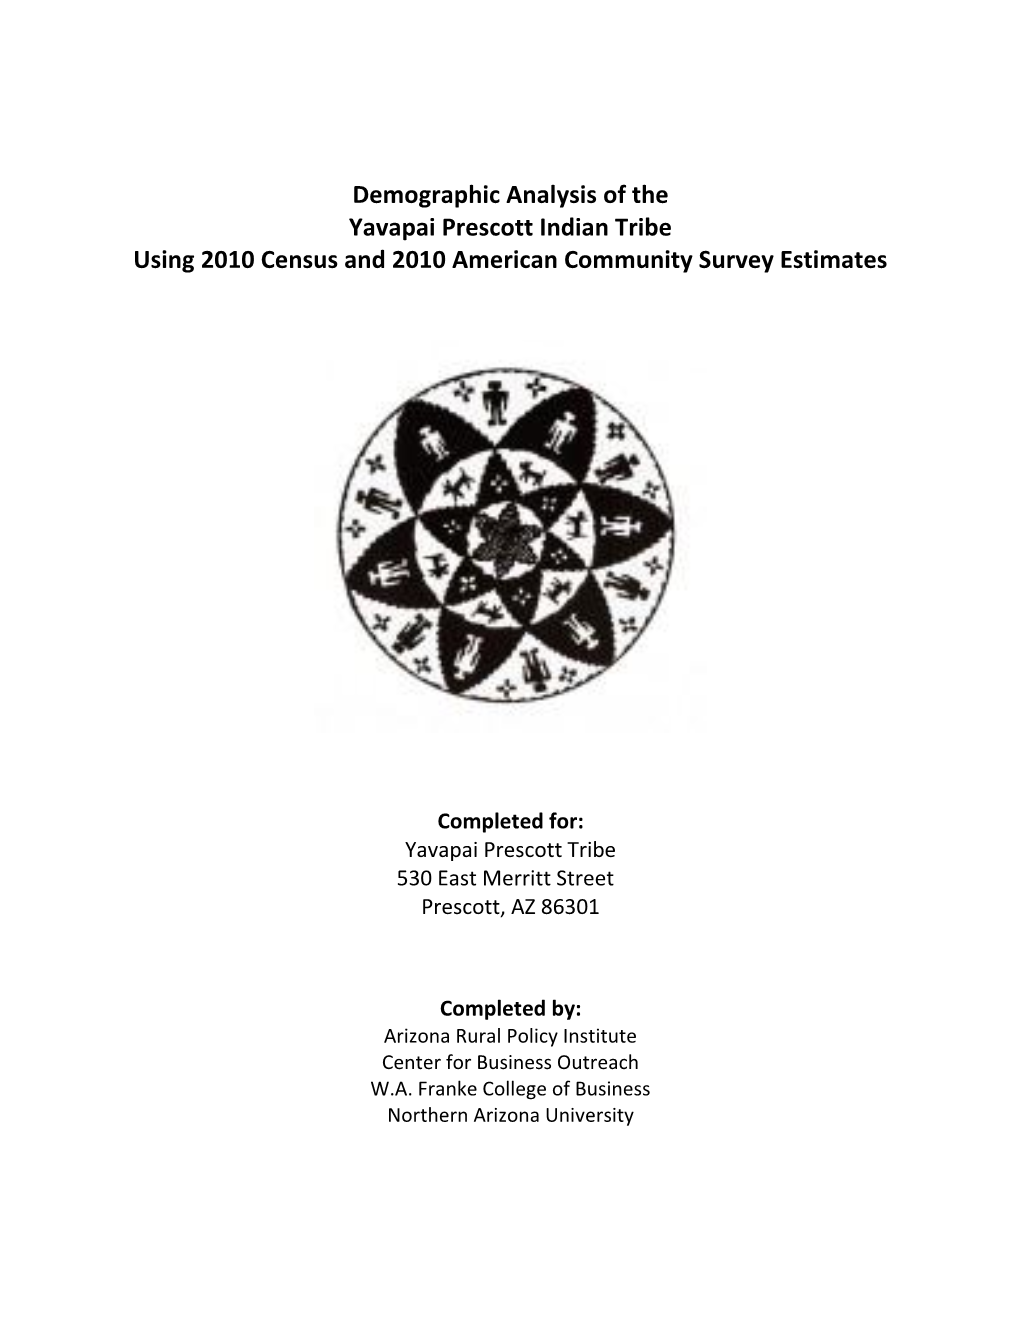 Demographic Analysis of the Yavapai Prescott Indian Tribe Using 2010 Census and 2010 American Community Survey Estimates